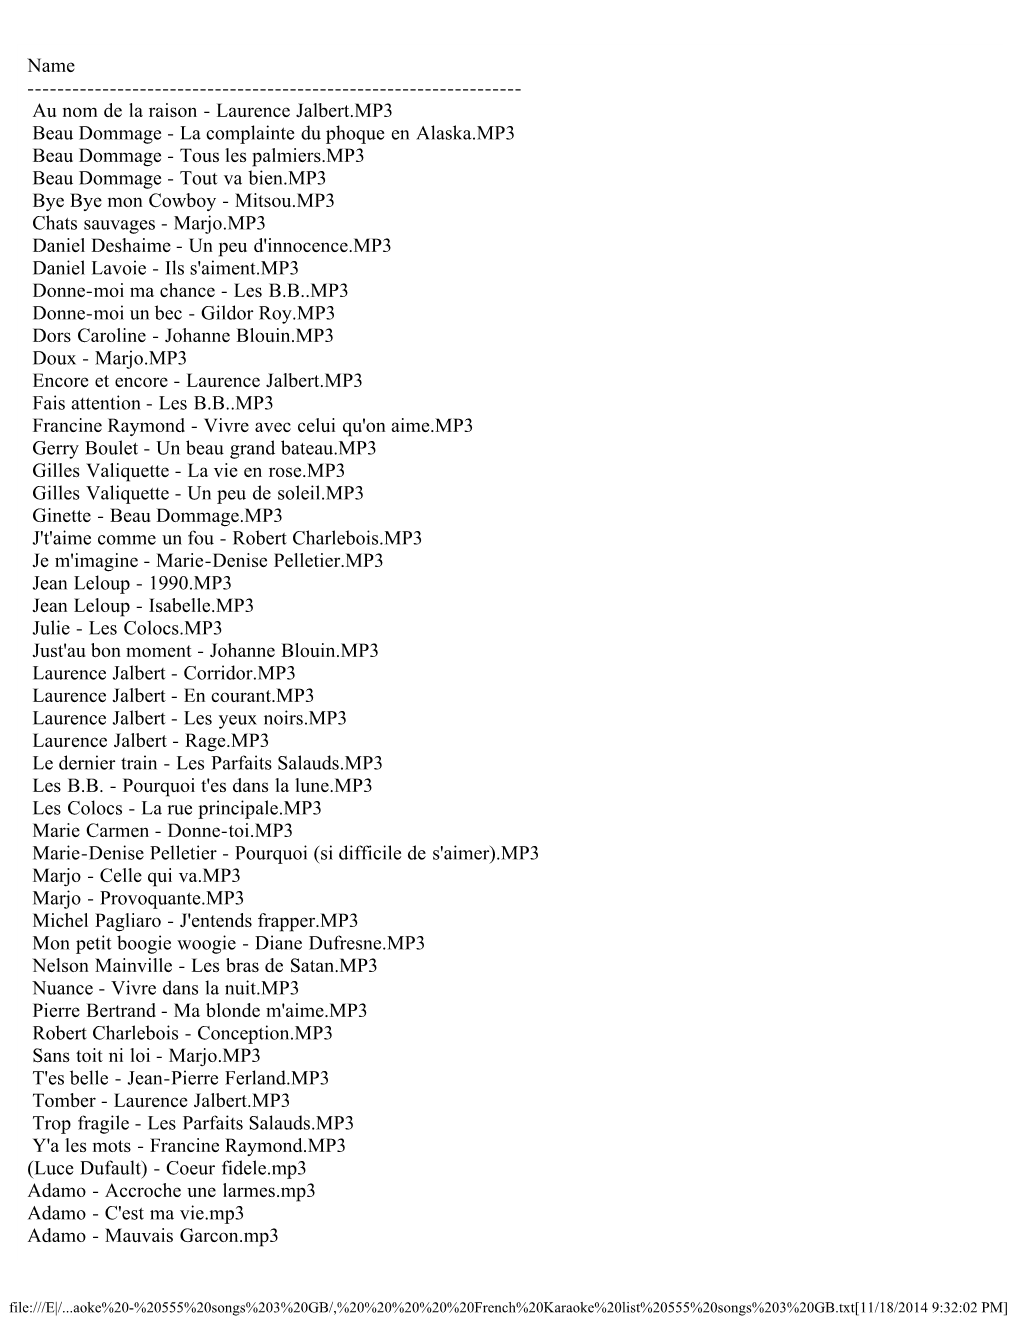 French List-555-Songs.Pdf